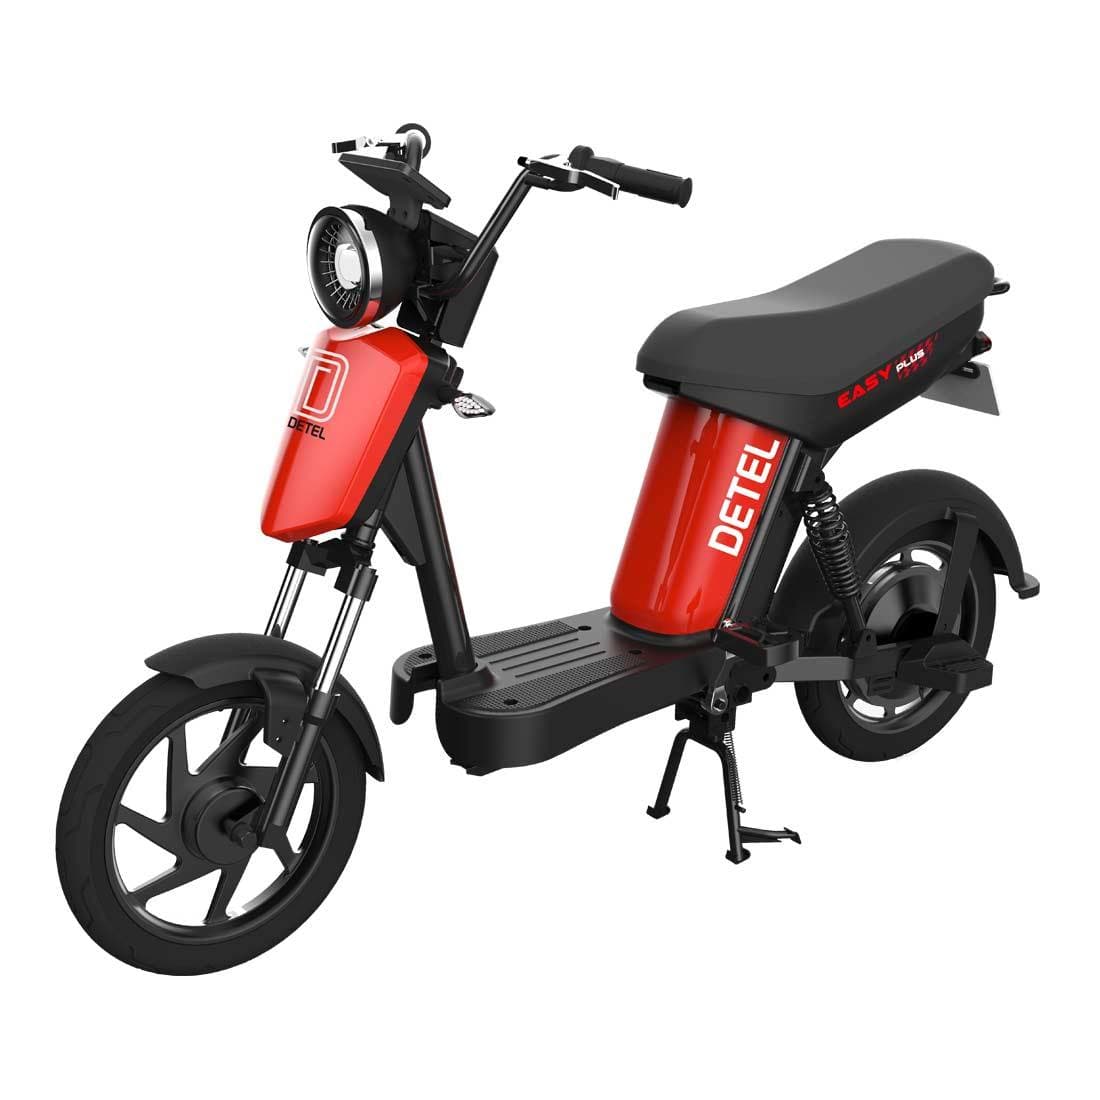 detel easy plus india's cheapest e-scooter